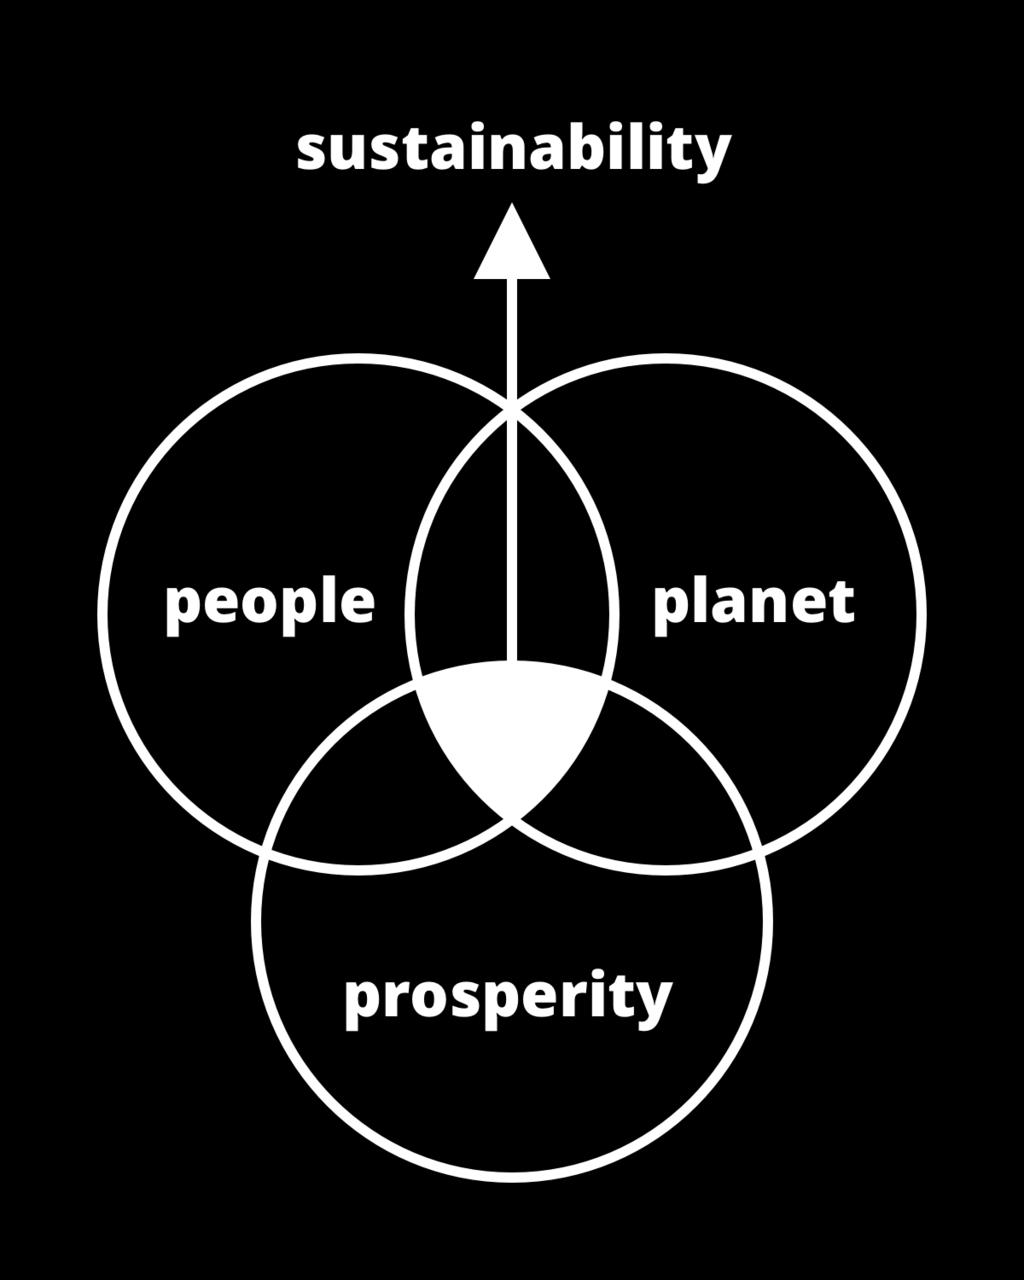 People Planet Prosperity People waardigheid, gelijkheid, gezondheid Planet